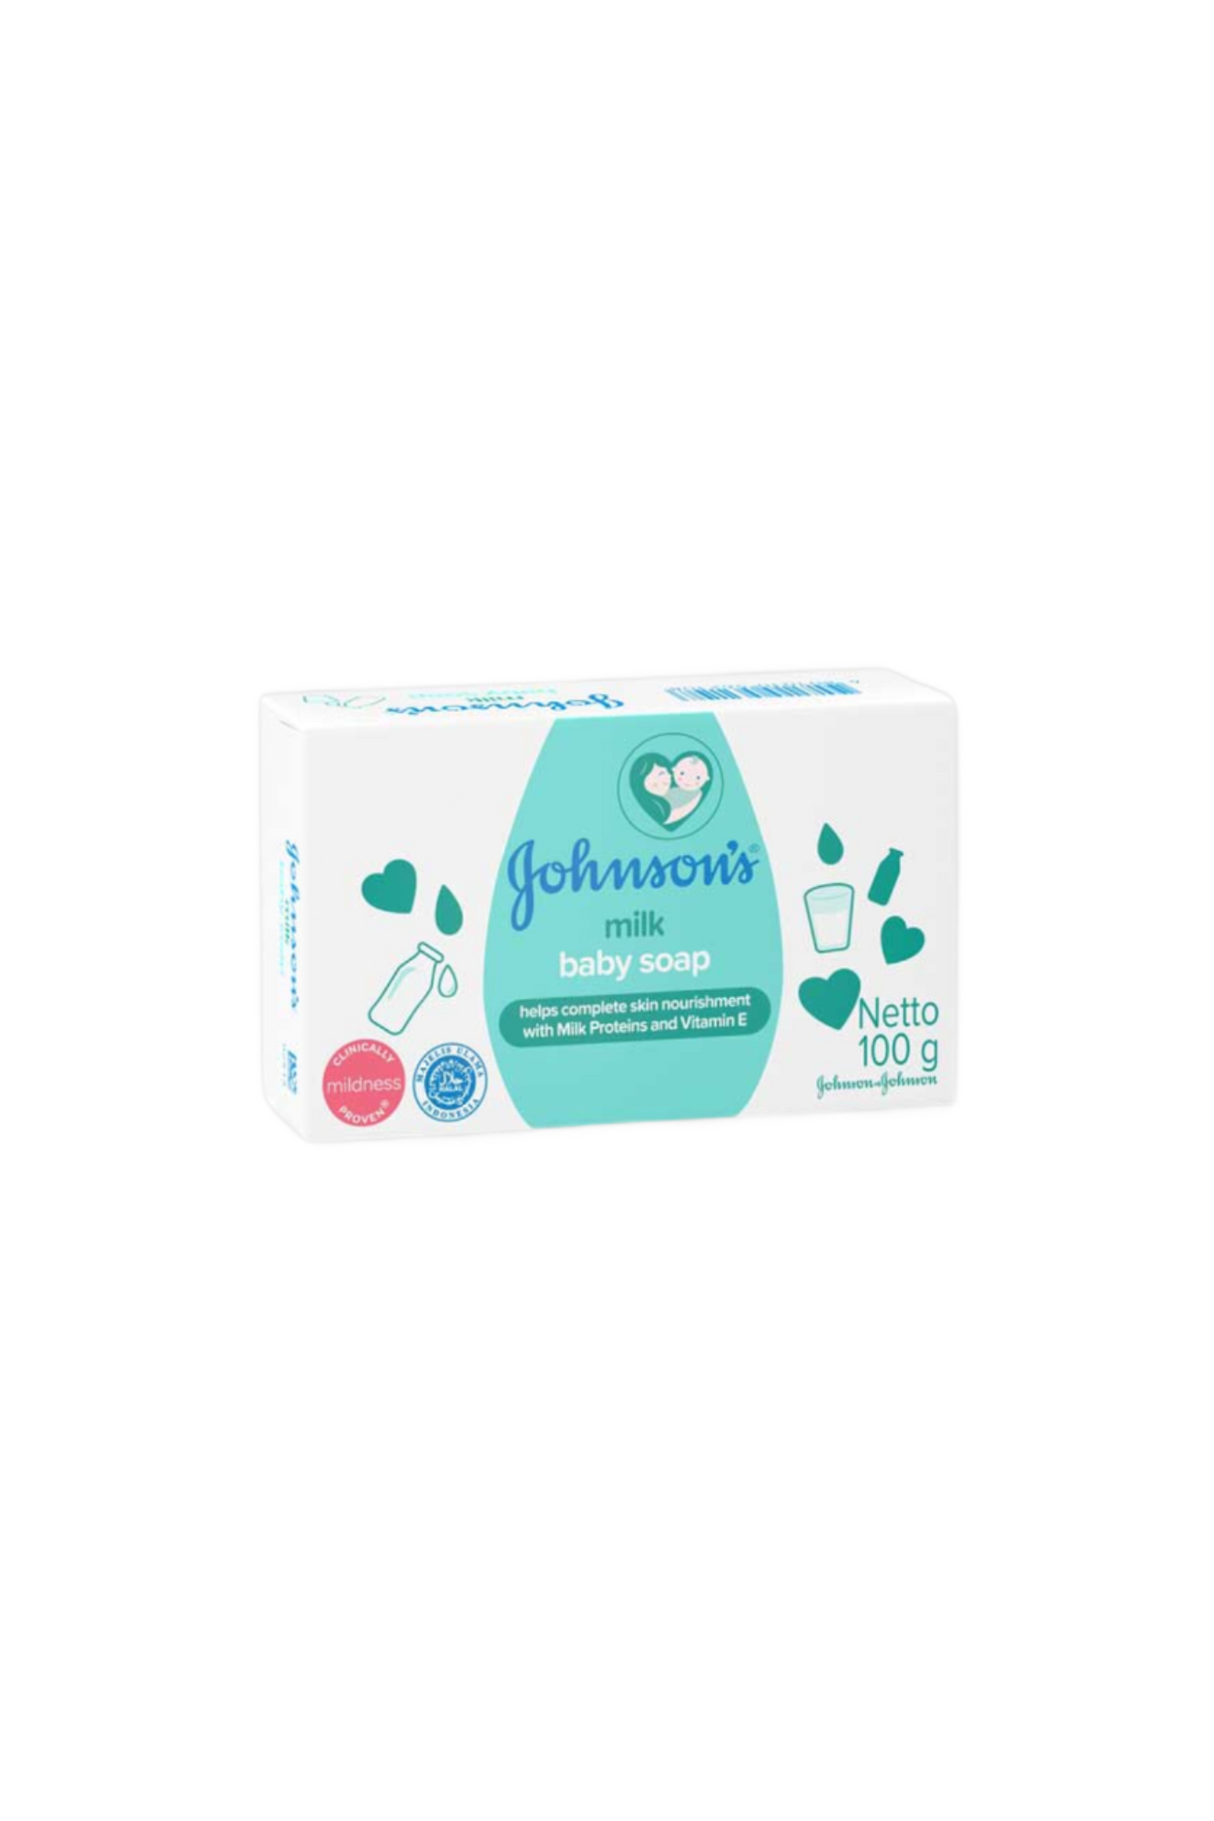 johnsons milk baby soap 100g